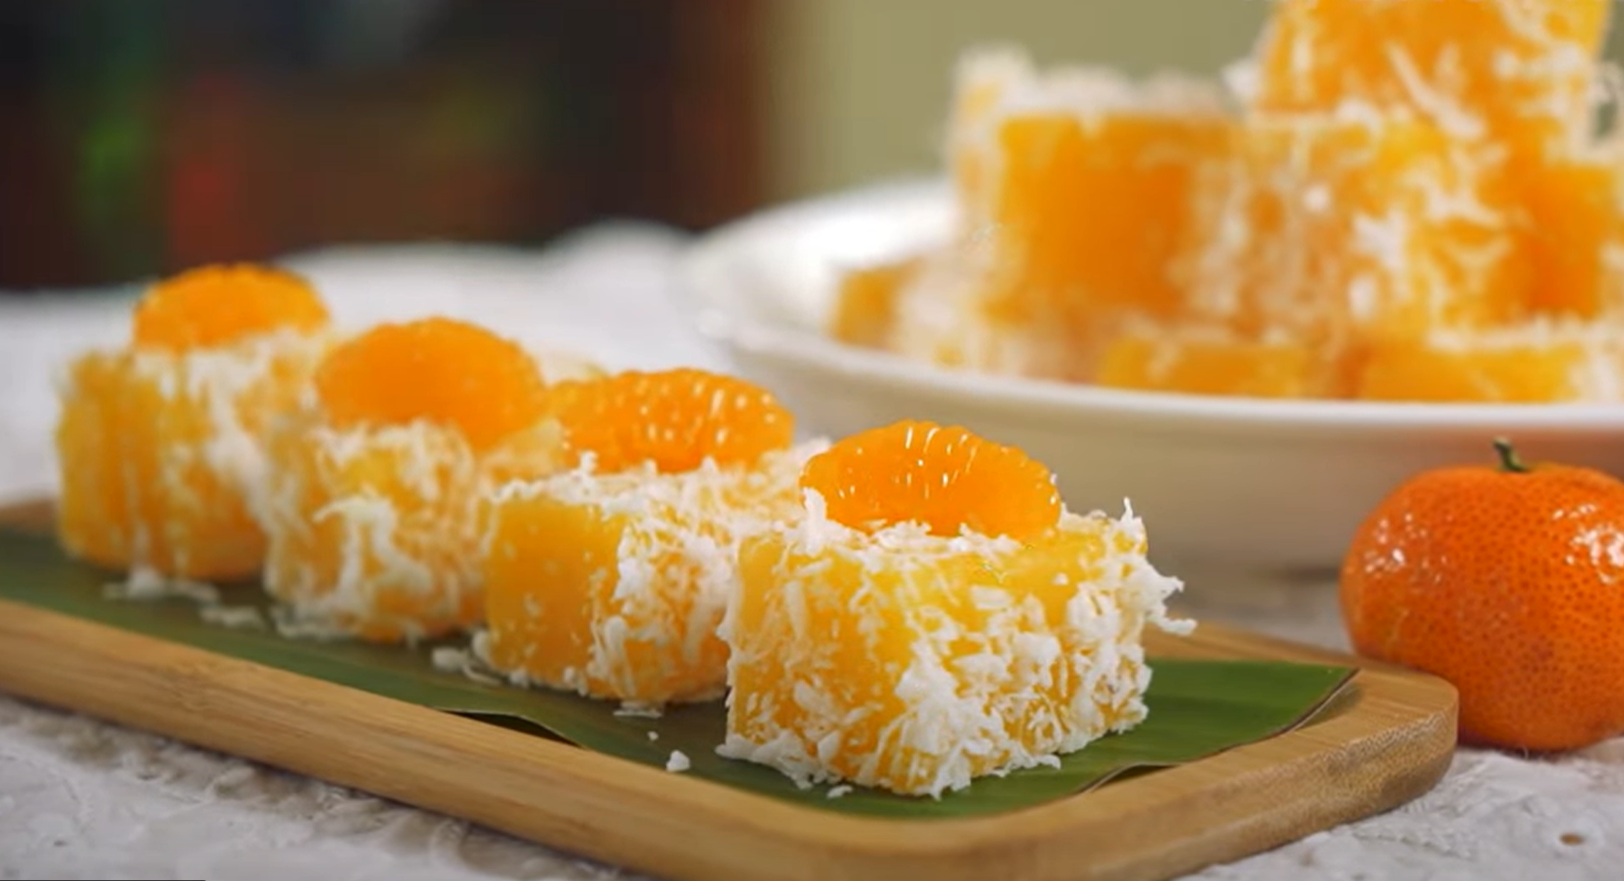 CNY cakes - steamed mandarin cake